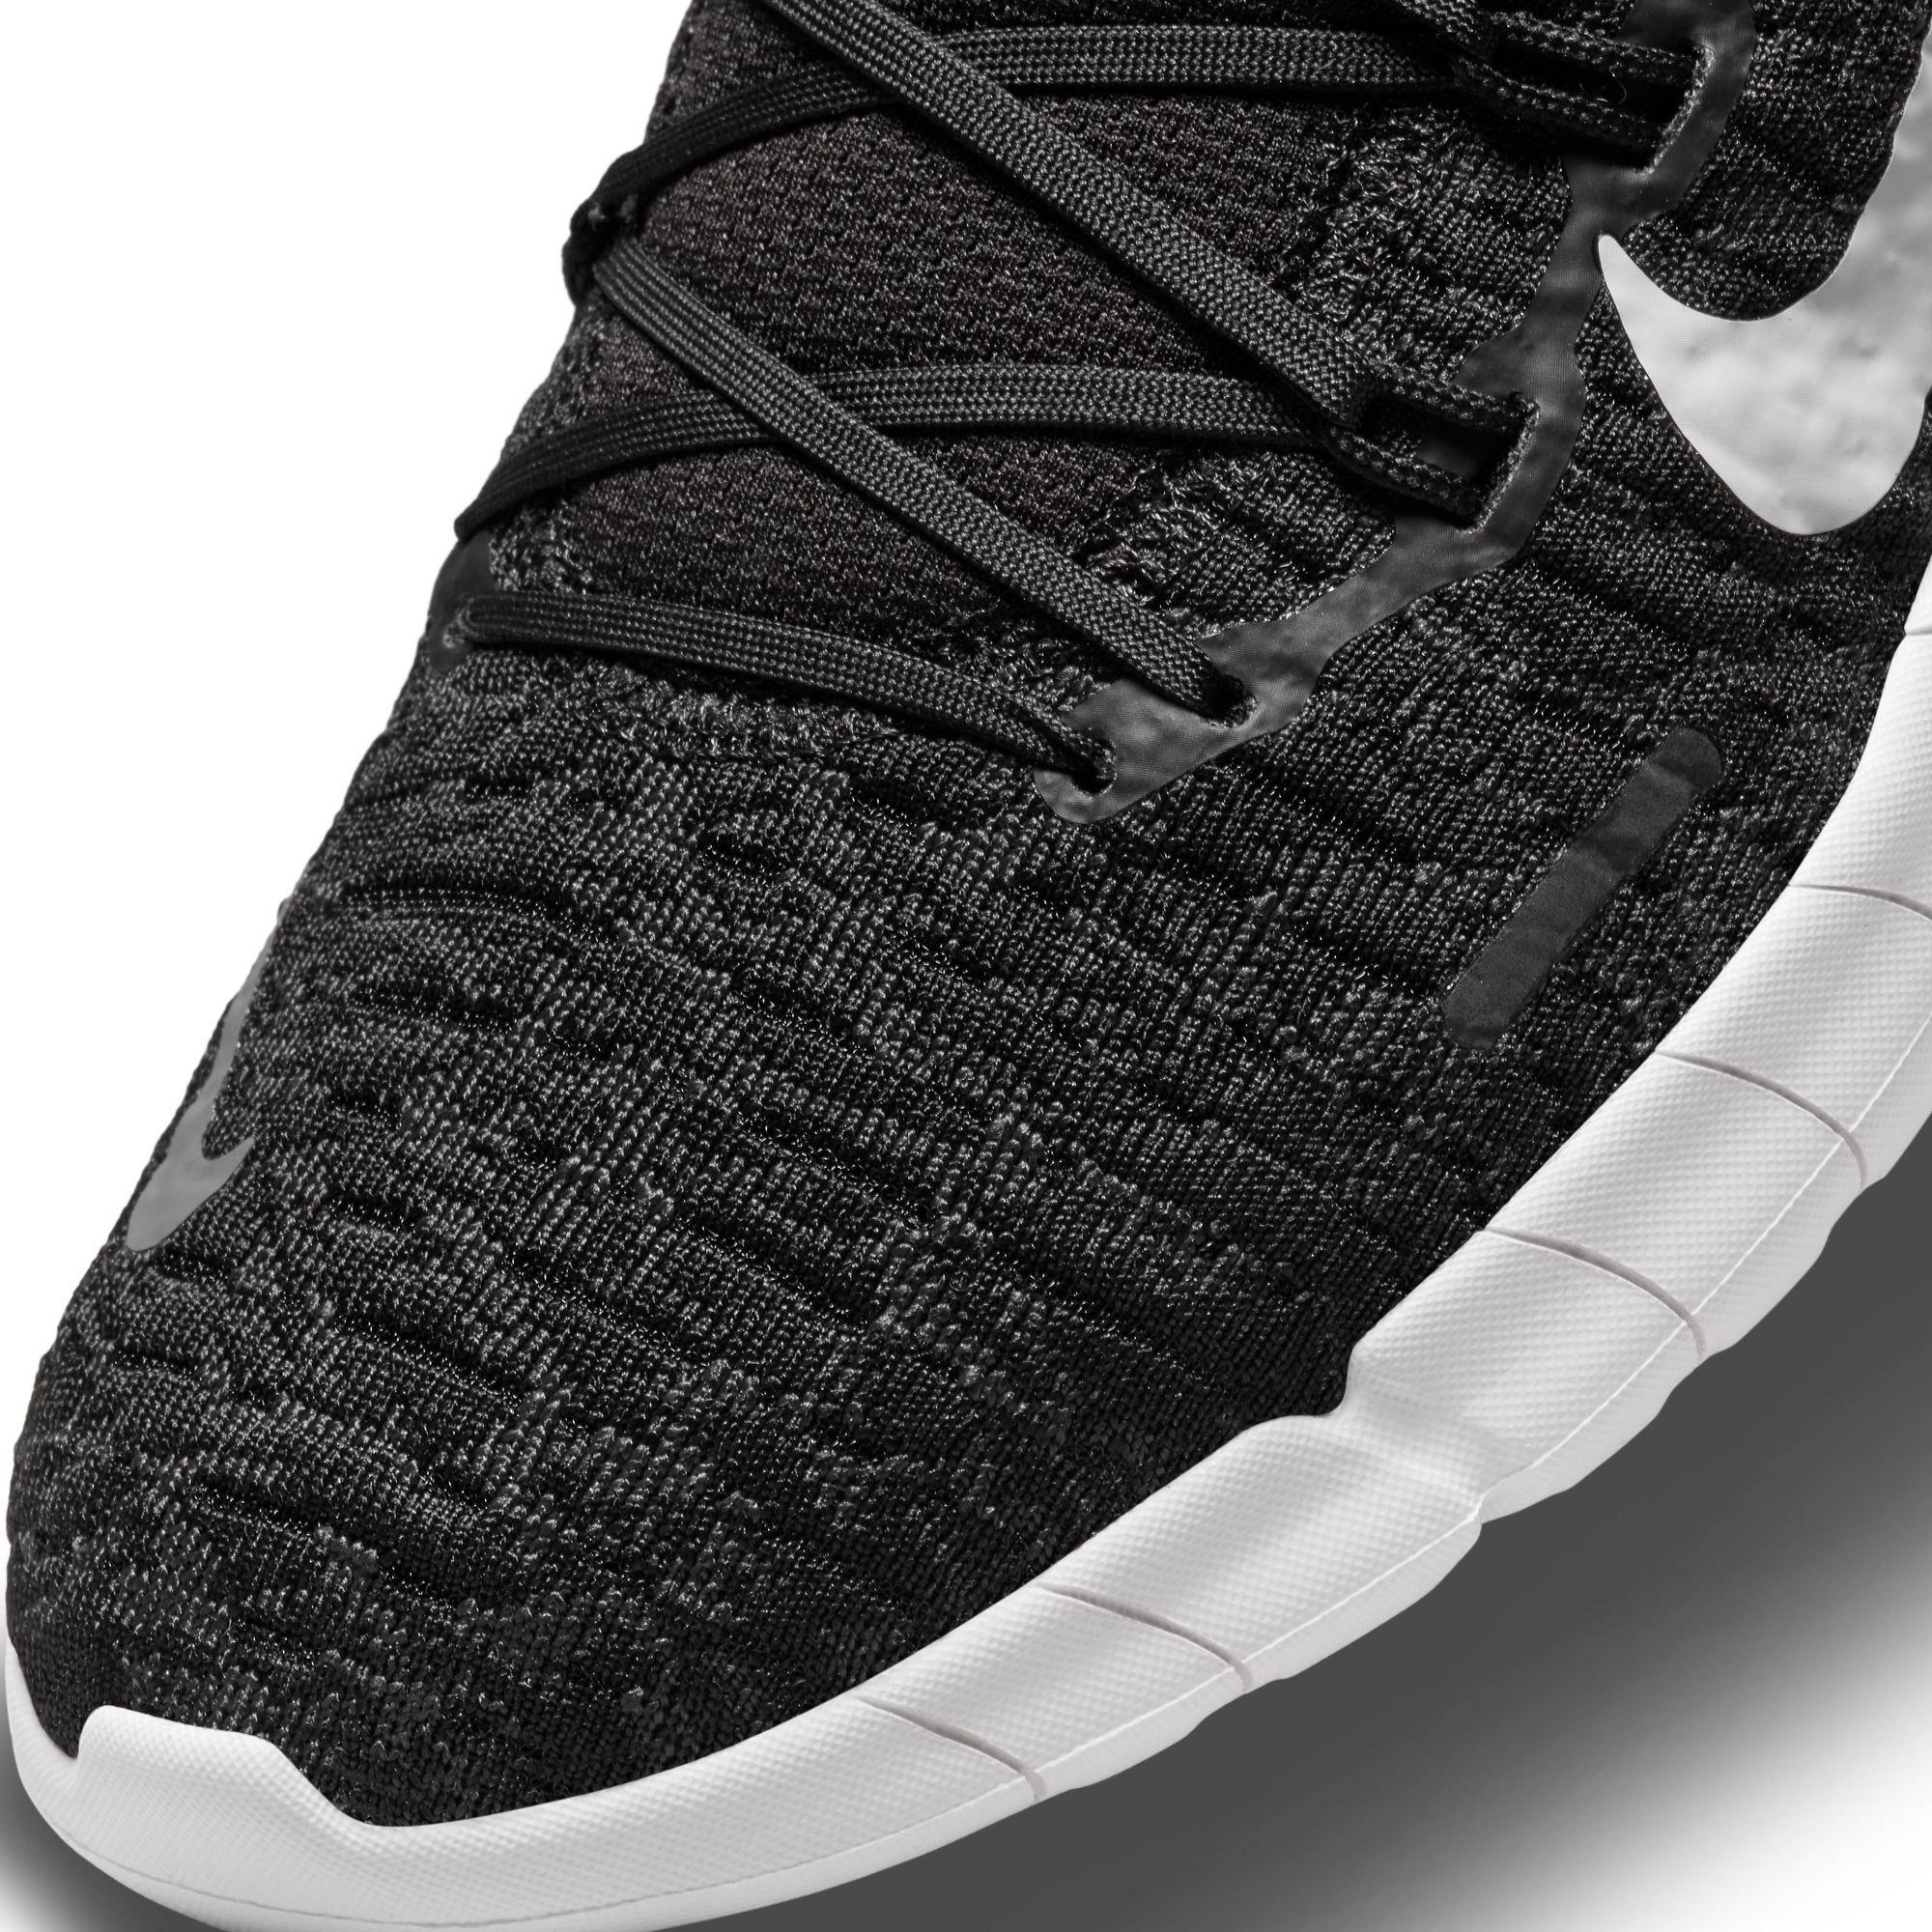 Capilares Groseramente Exagerar Nike Free Run 5.0 "Black/White/Smoke Grey" Women's Running Shoe